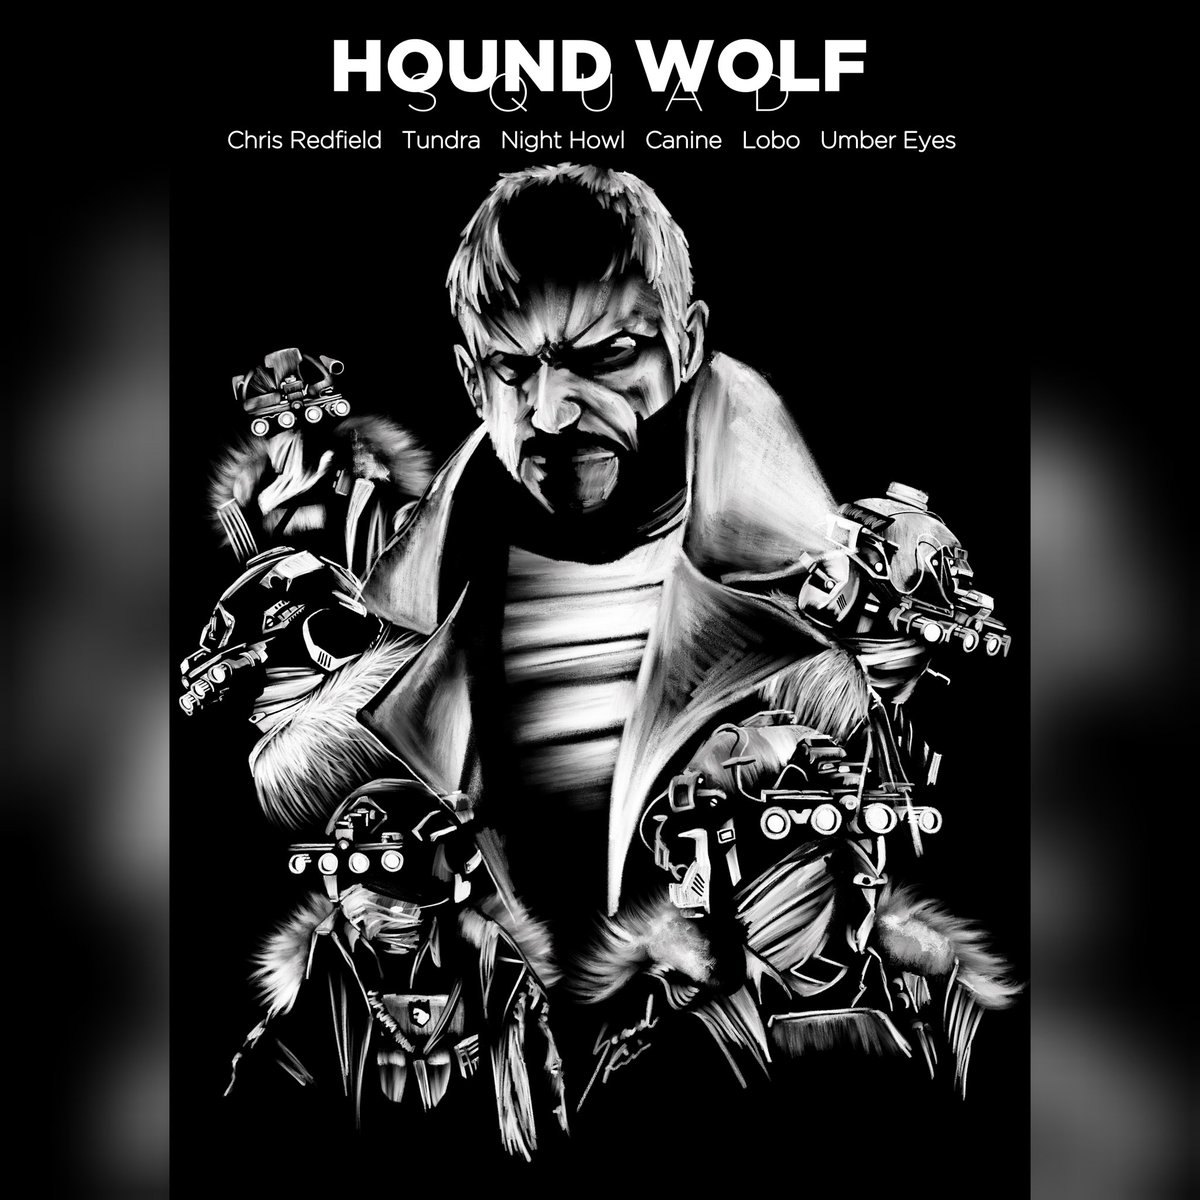 #houndwolfsquad #houndwolf #squad #hound #wolf #chrisredfield #residentevil #residentevilvillage #residentevil8 #village #digitaldrawing #digitalillustration #digital #digitalart #huiontablet #huion #mypaint #blackandwhite #illustration @capcom_official